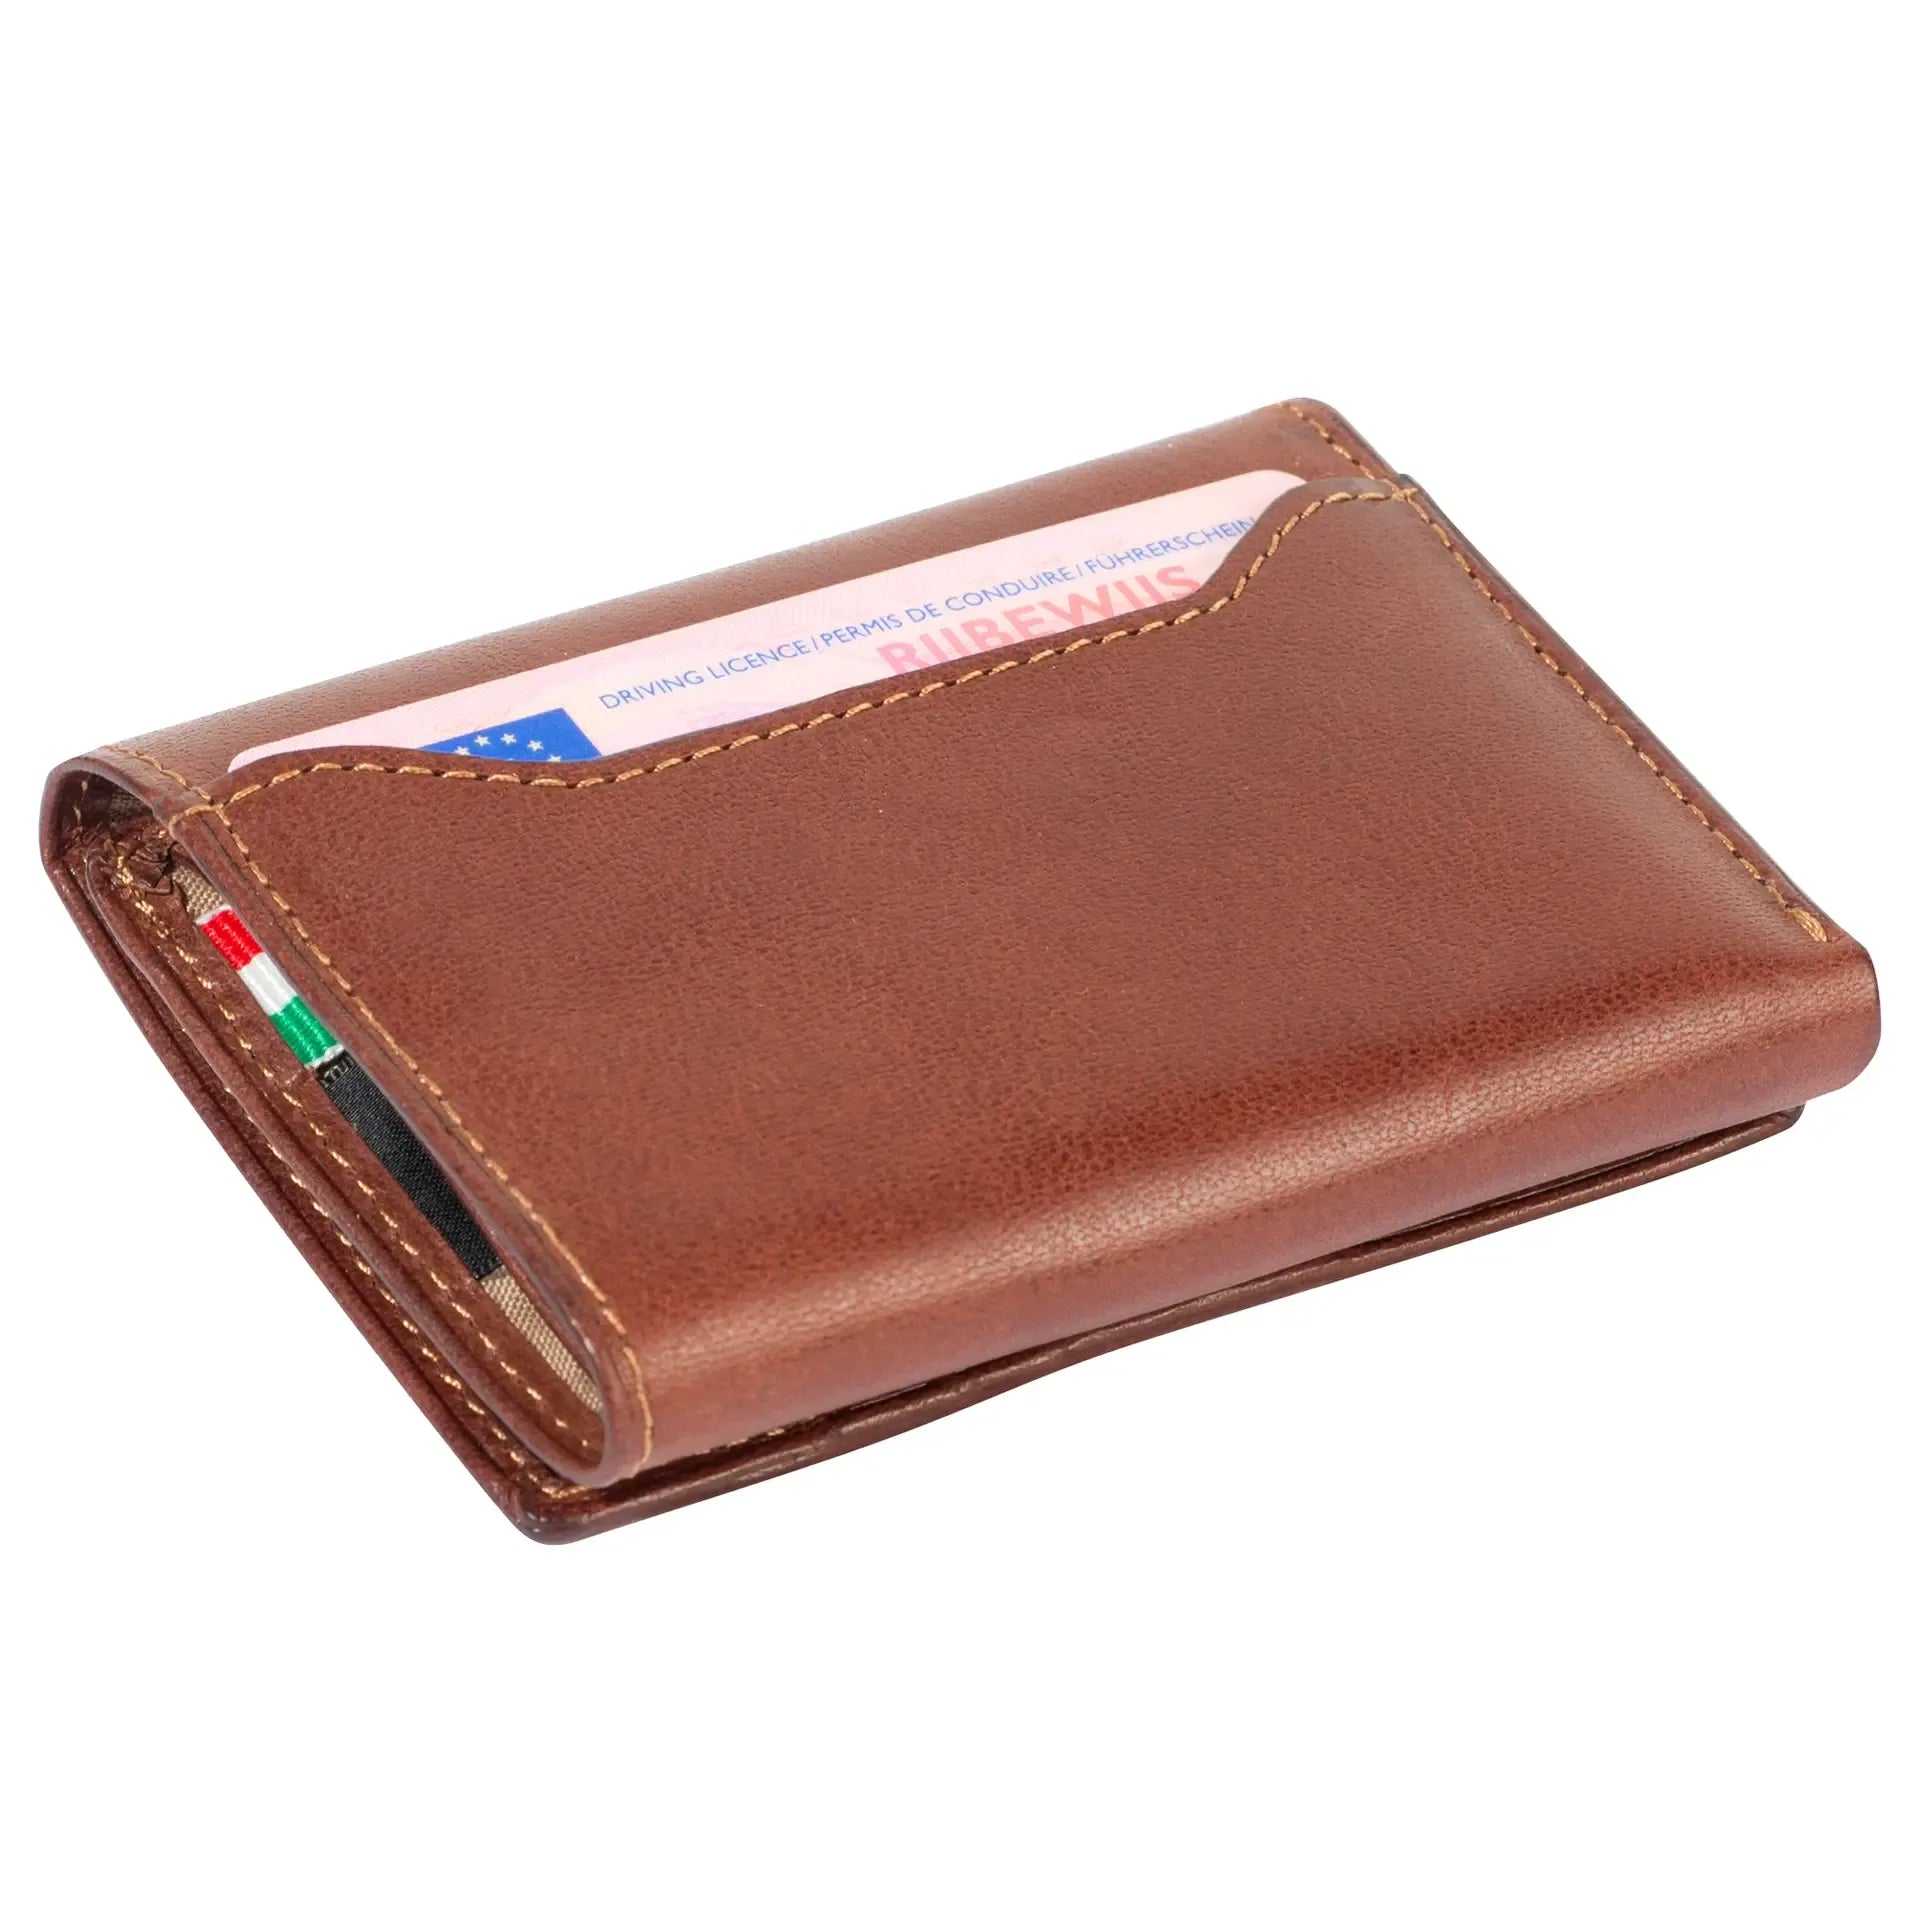 Tony Perotti Furbo Pure wallet 10 cm - Black